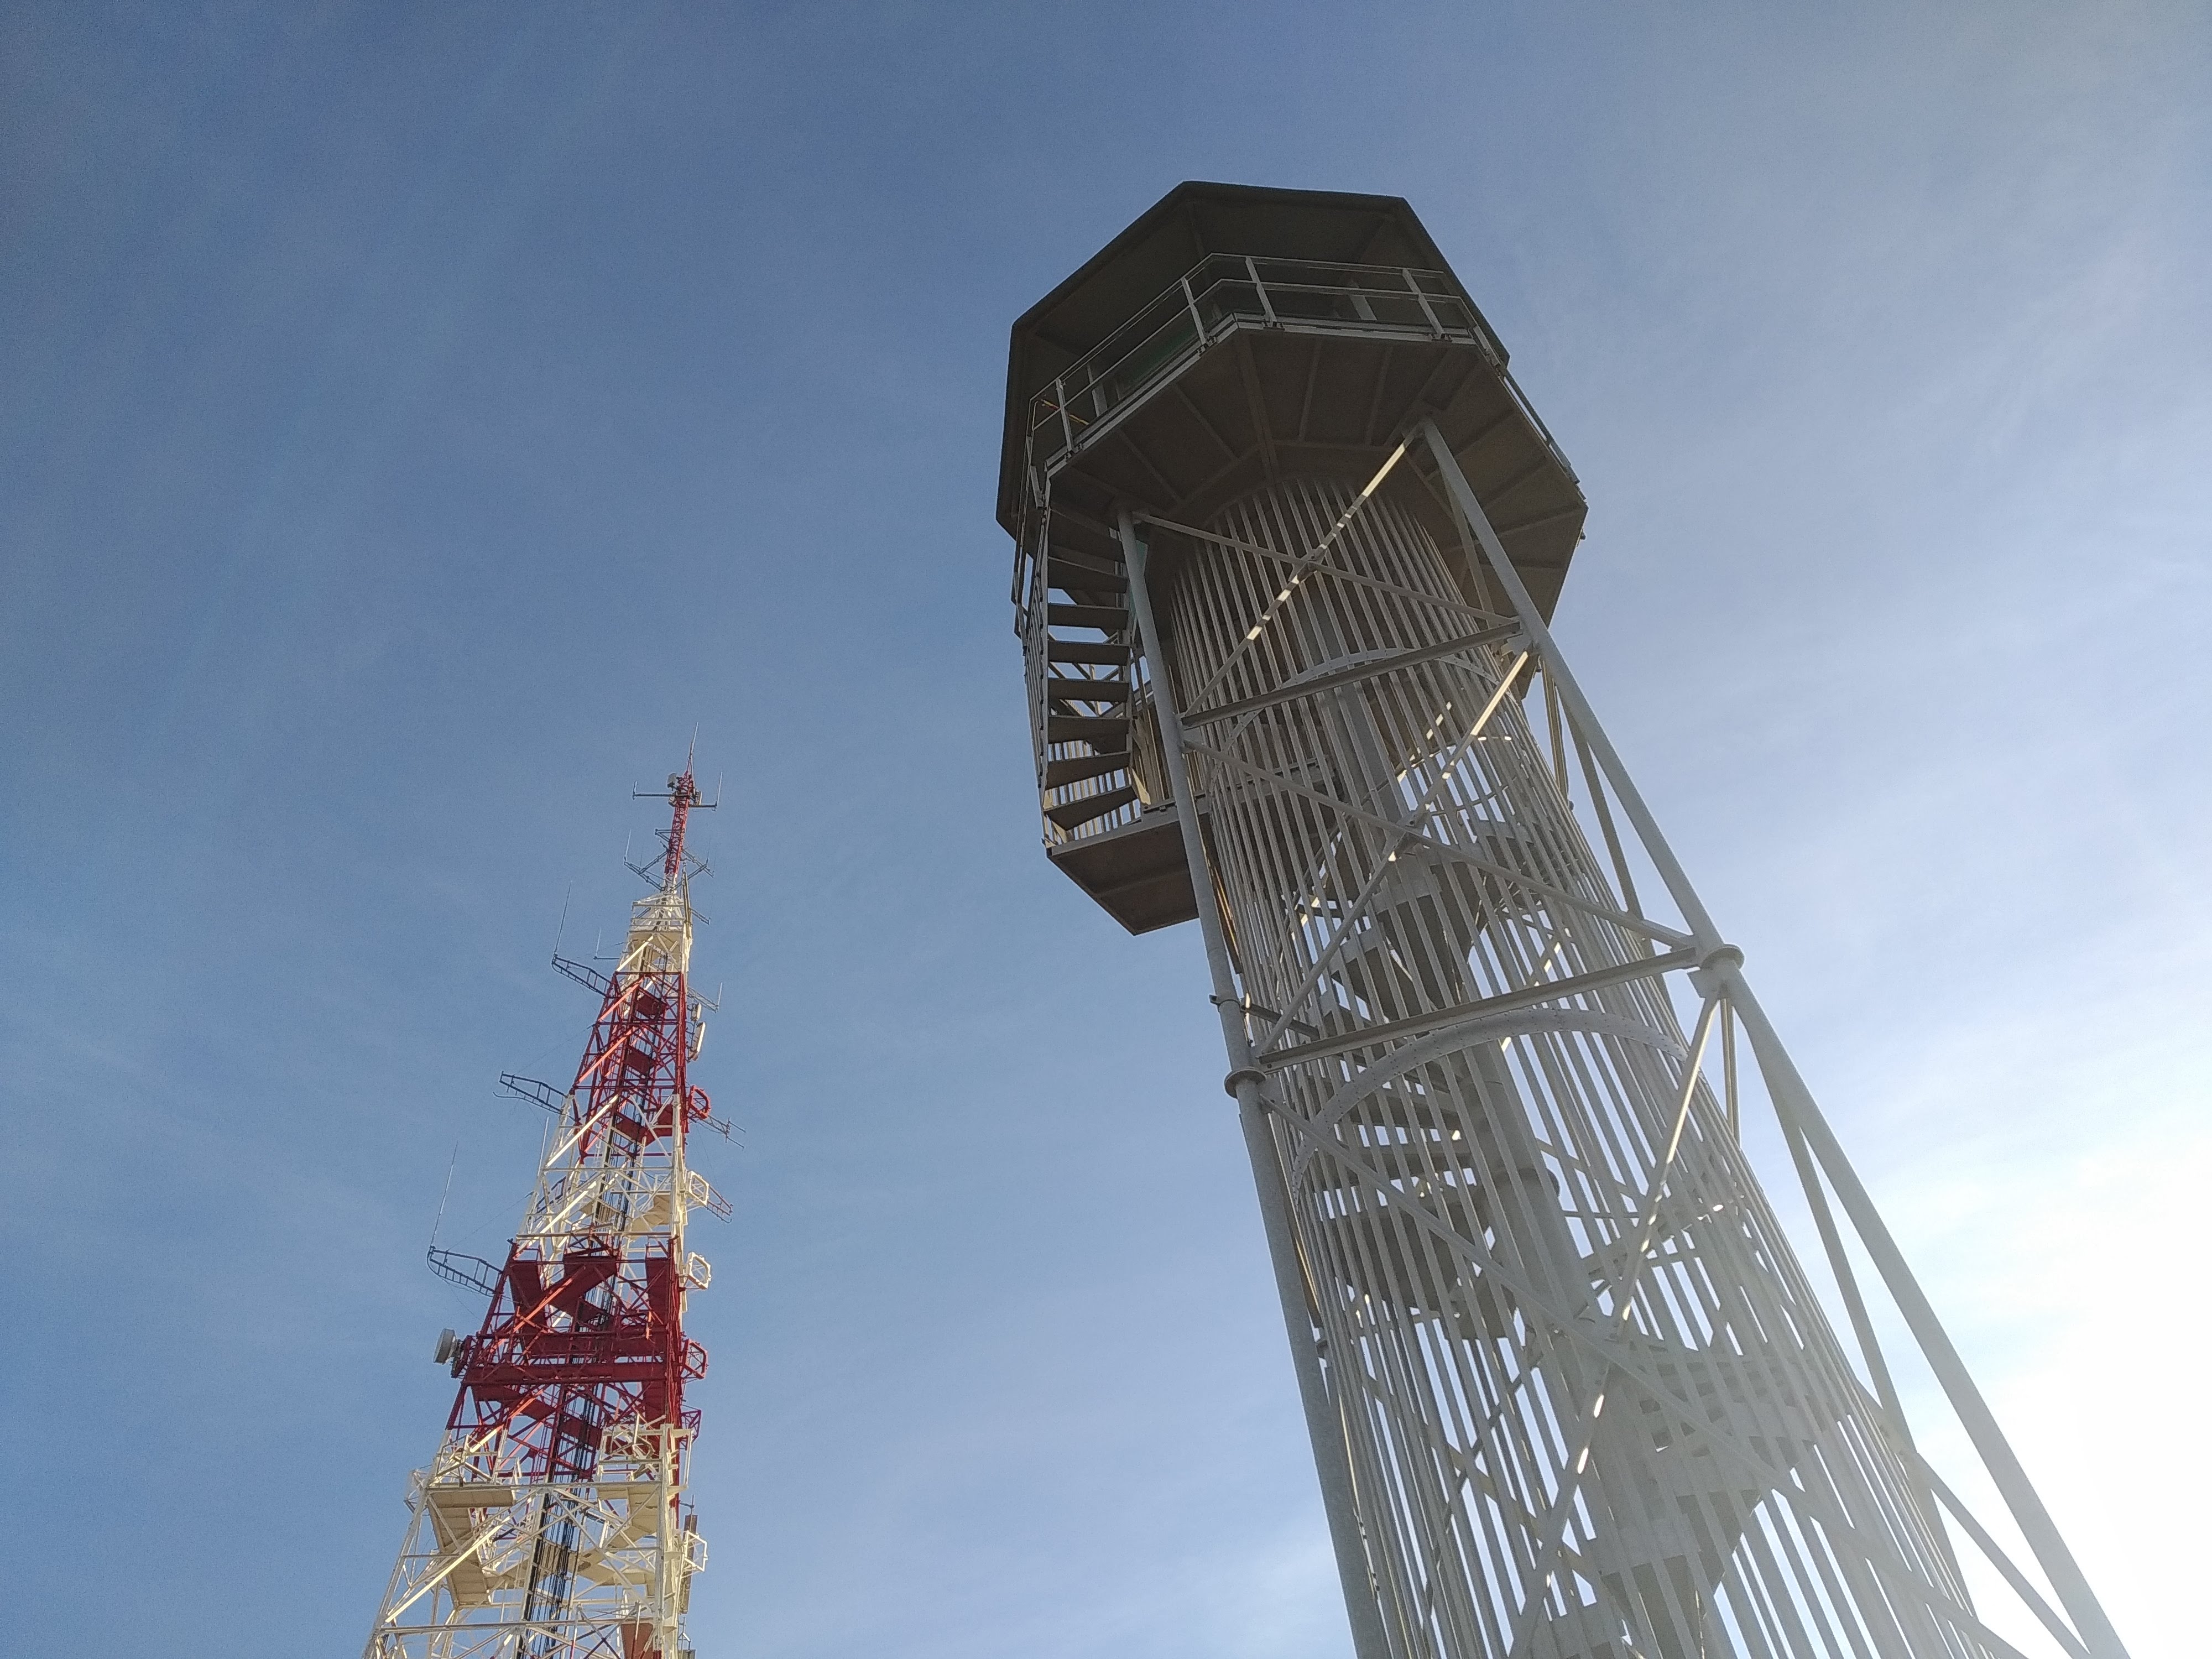 Torre de telecomunicaciones y torre de control de incendios en el turó de Sant Pere Màrtir